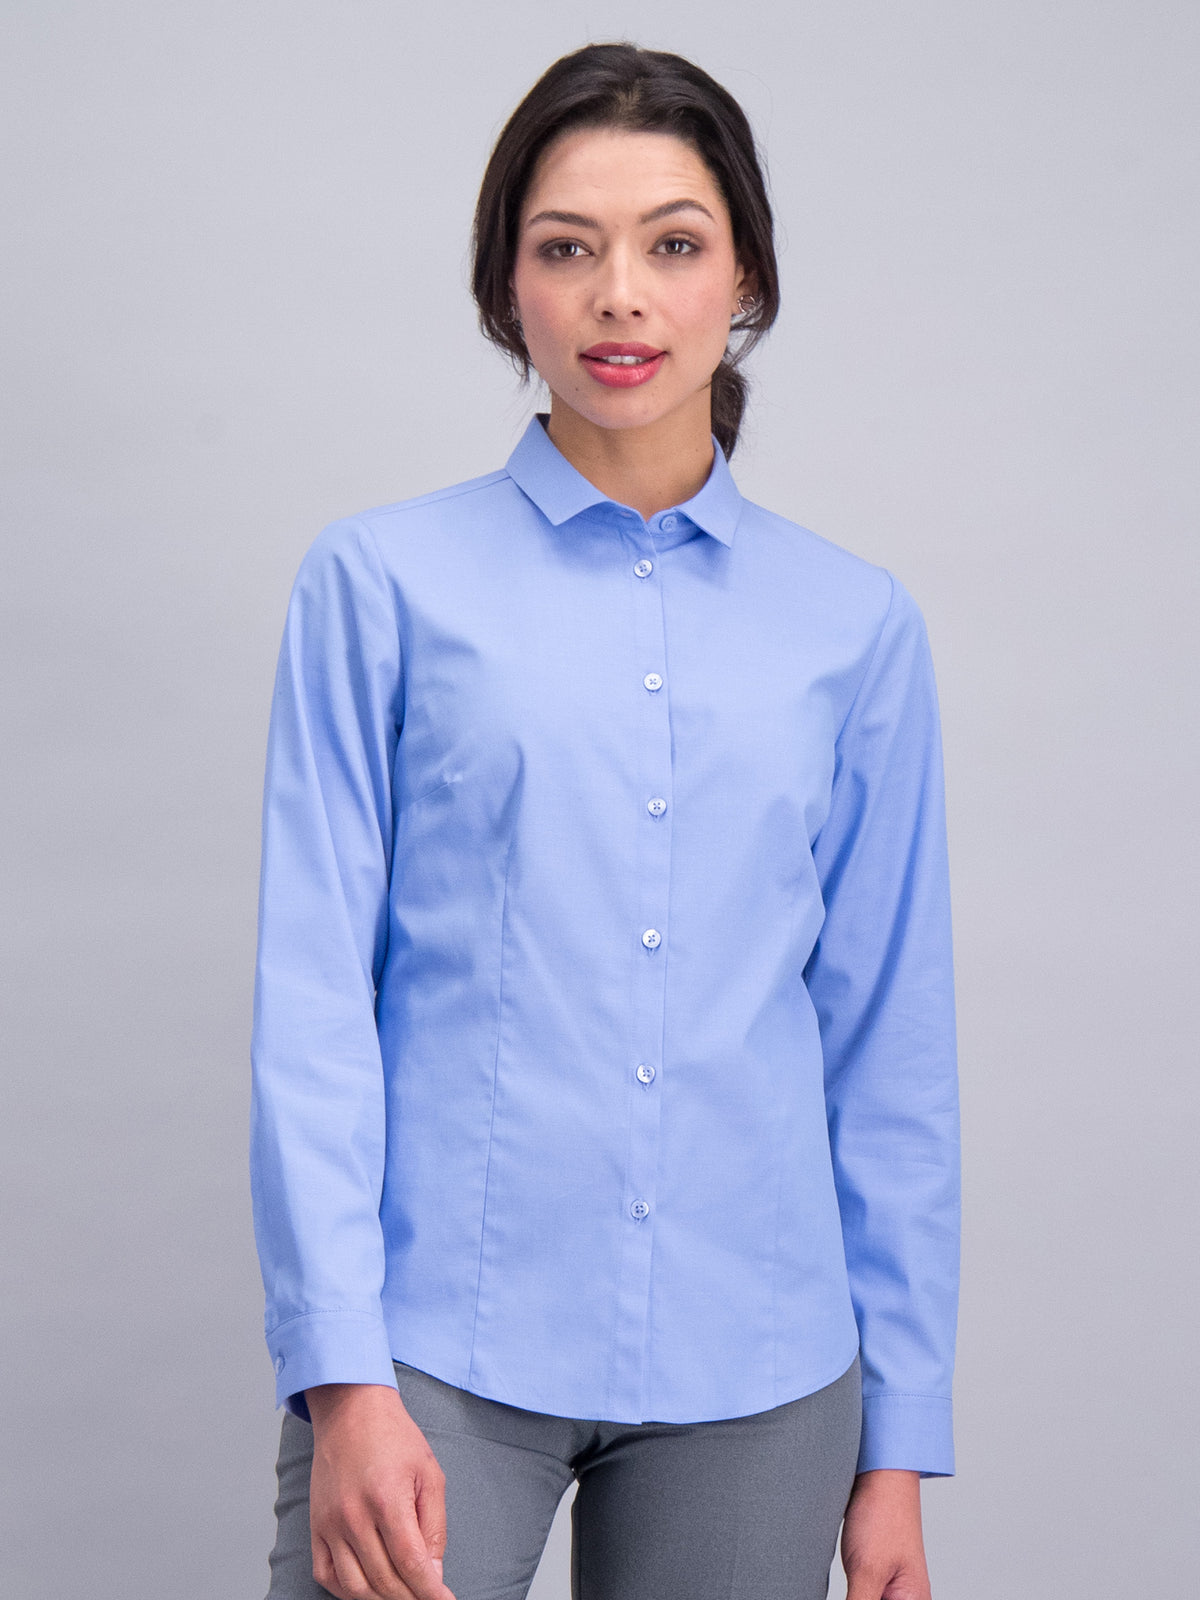 Karabo cotton shirt - light blue